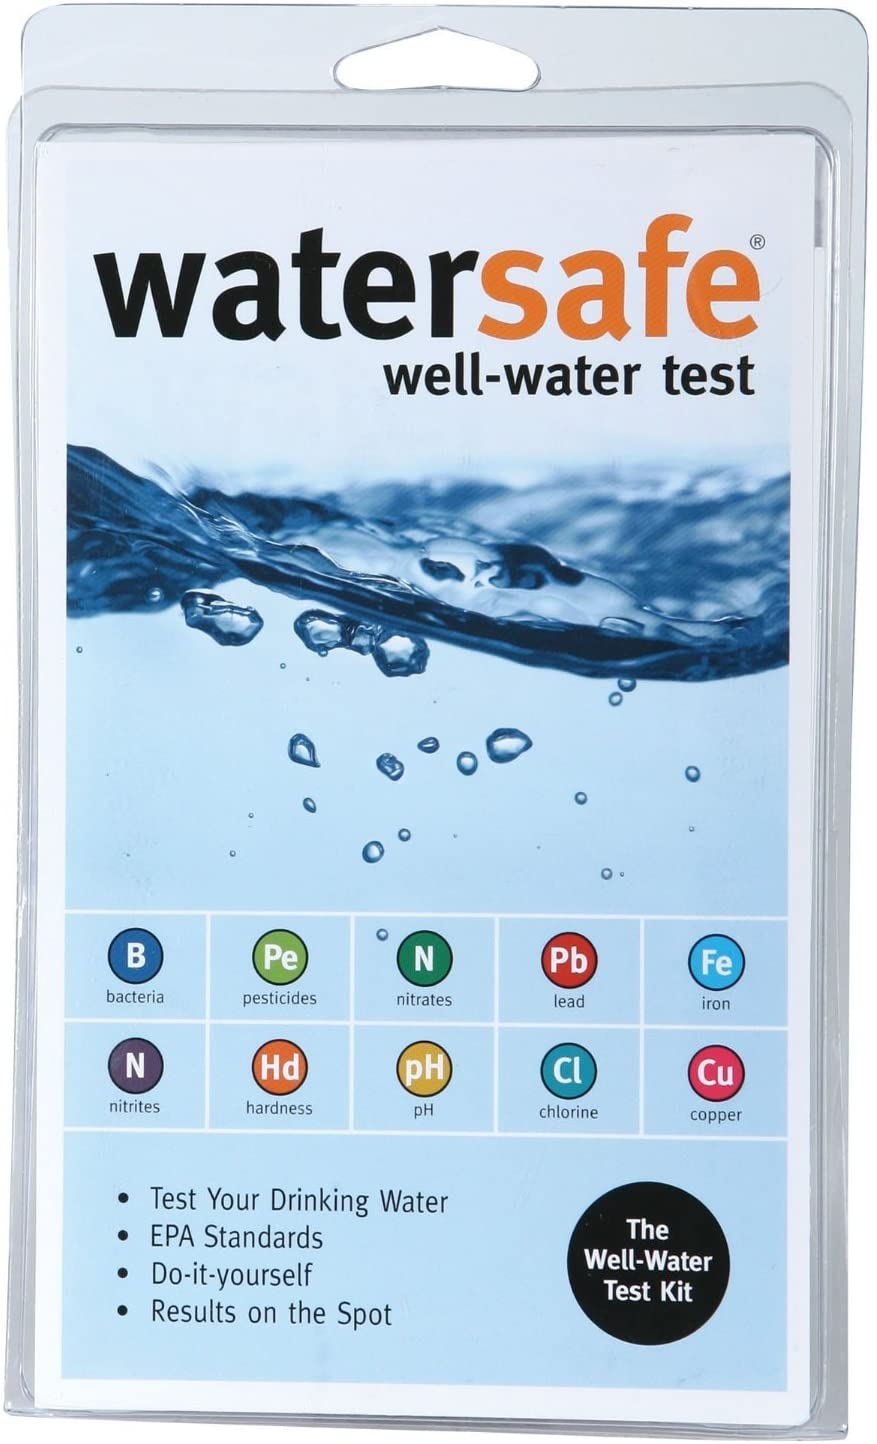 watersafe well water test